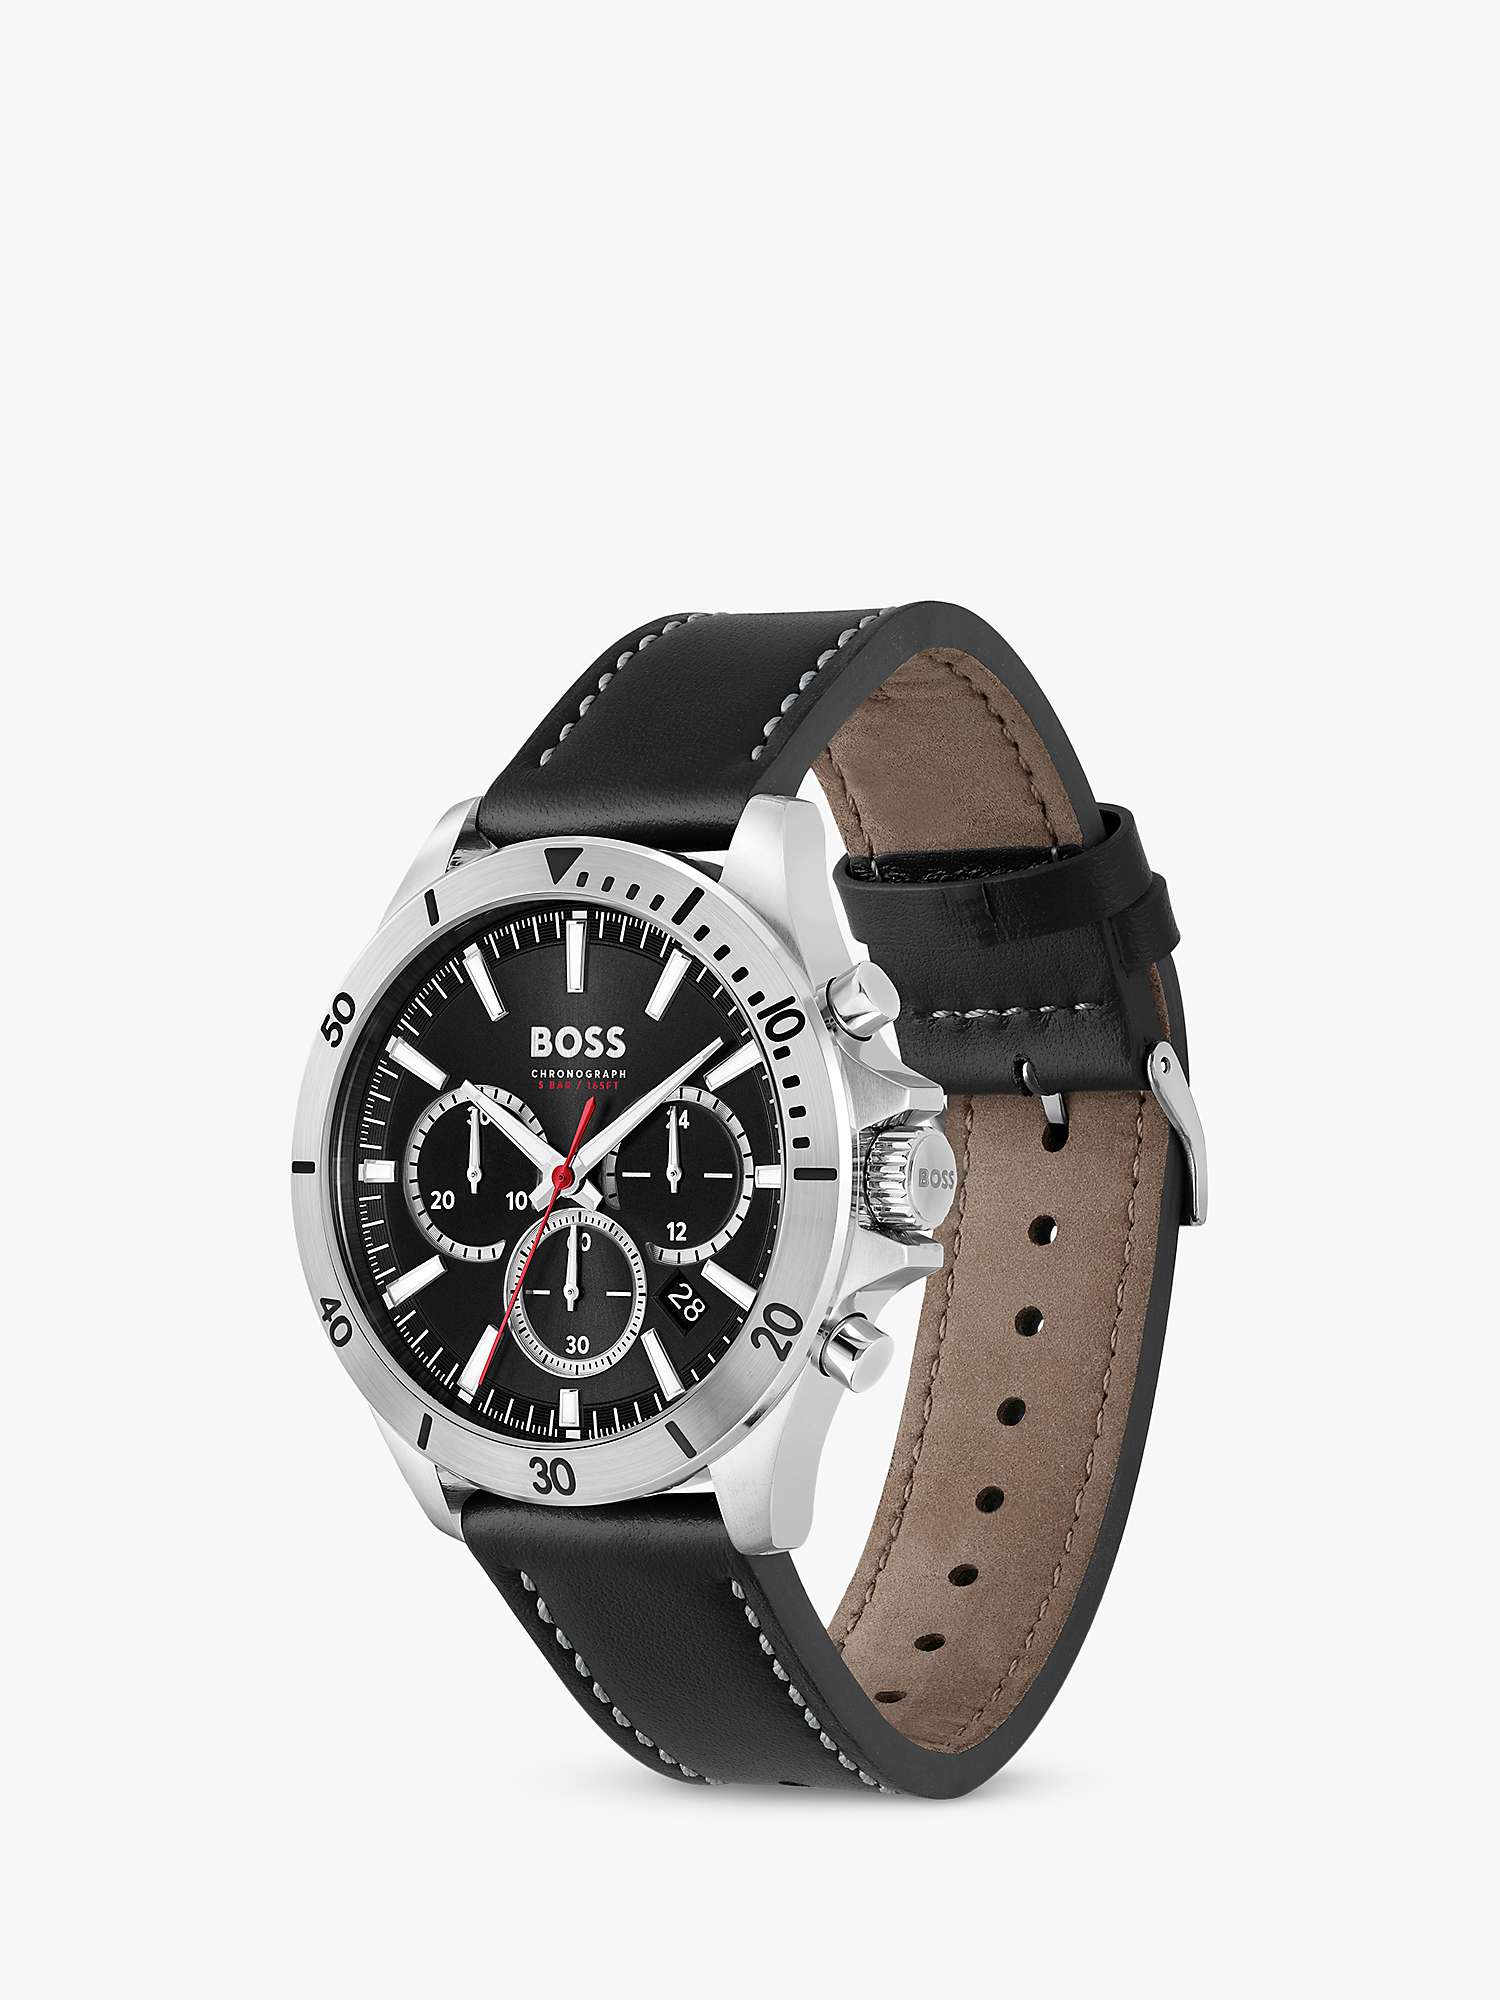 Buy BOSS Men's Troper Chronograph Leather Strap Watch, Black 1514055 Online at johnlewis.com